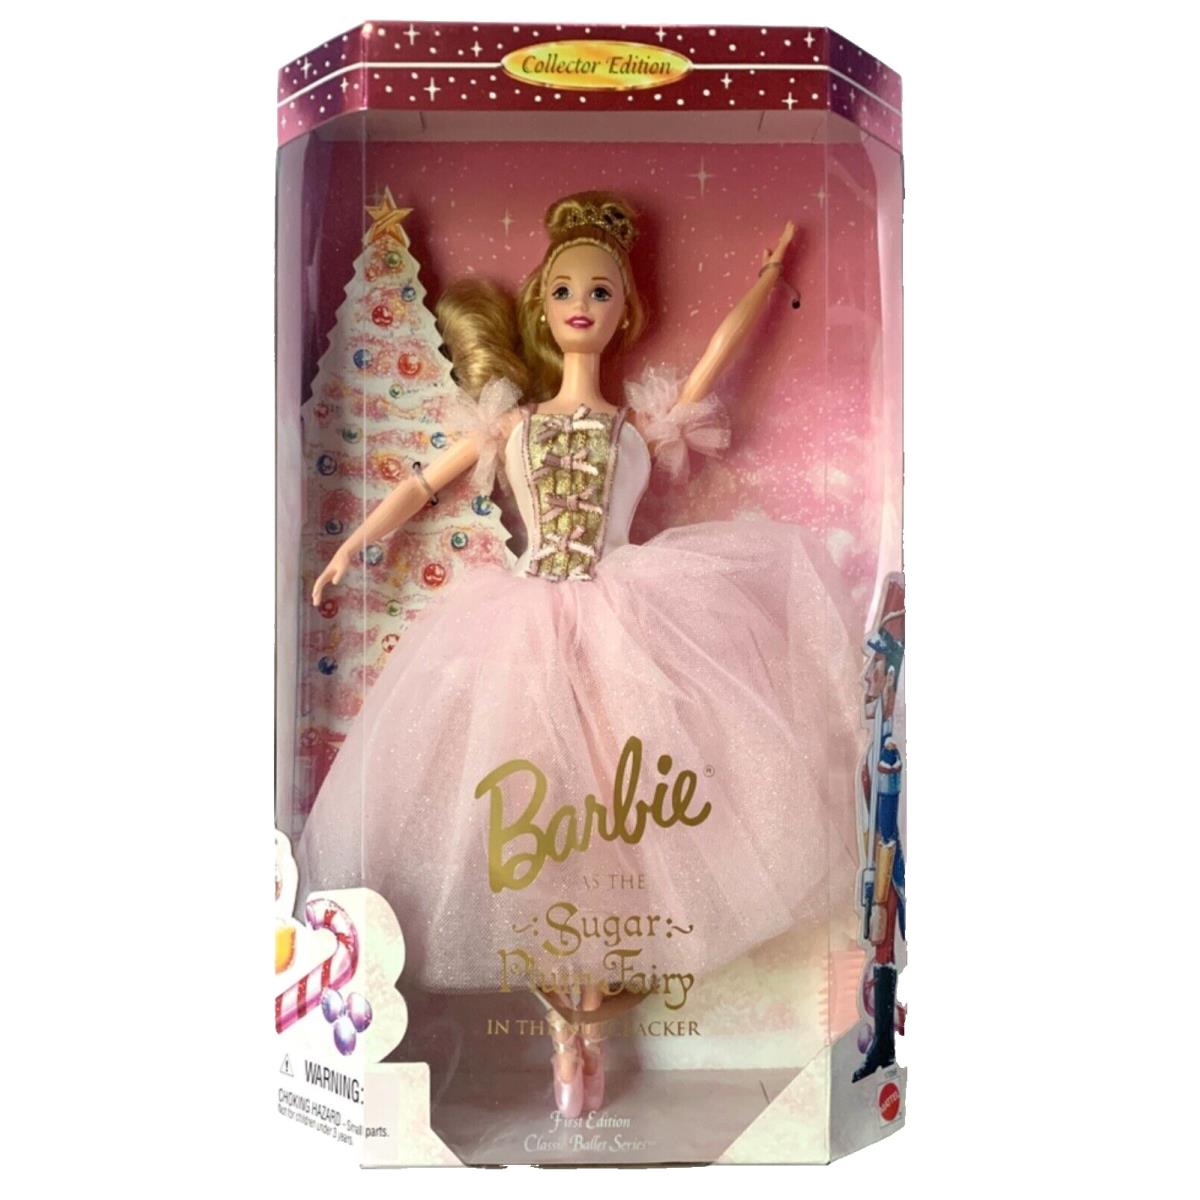 Barbie As Sugar Plum Fairy Doll 1996 Collector Edition Classic Ballet Series